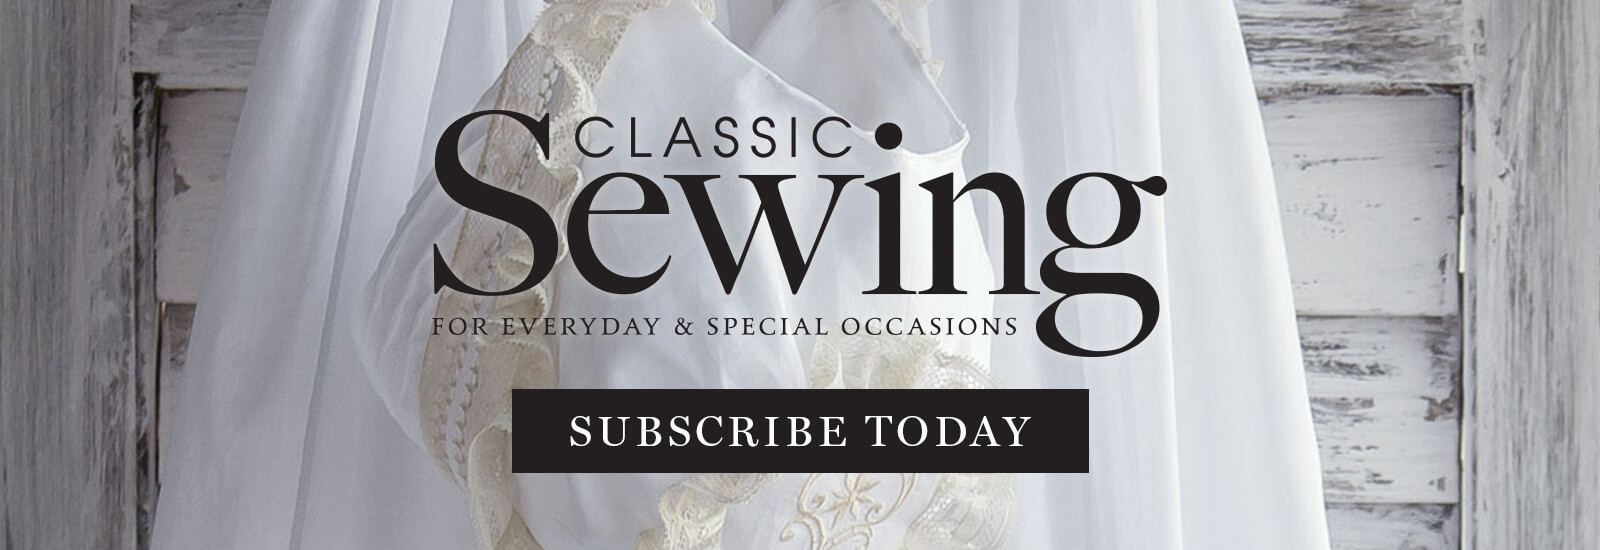 50 Years of the World's Best Scissor - Classic Sewing Magazine